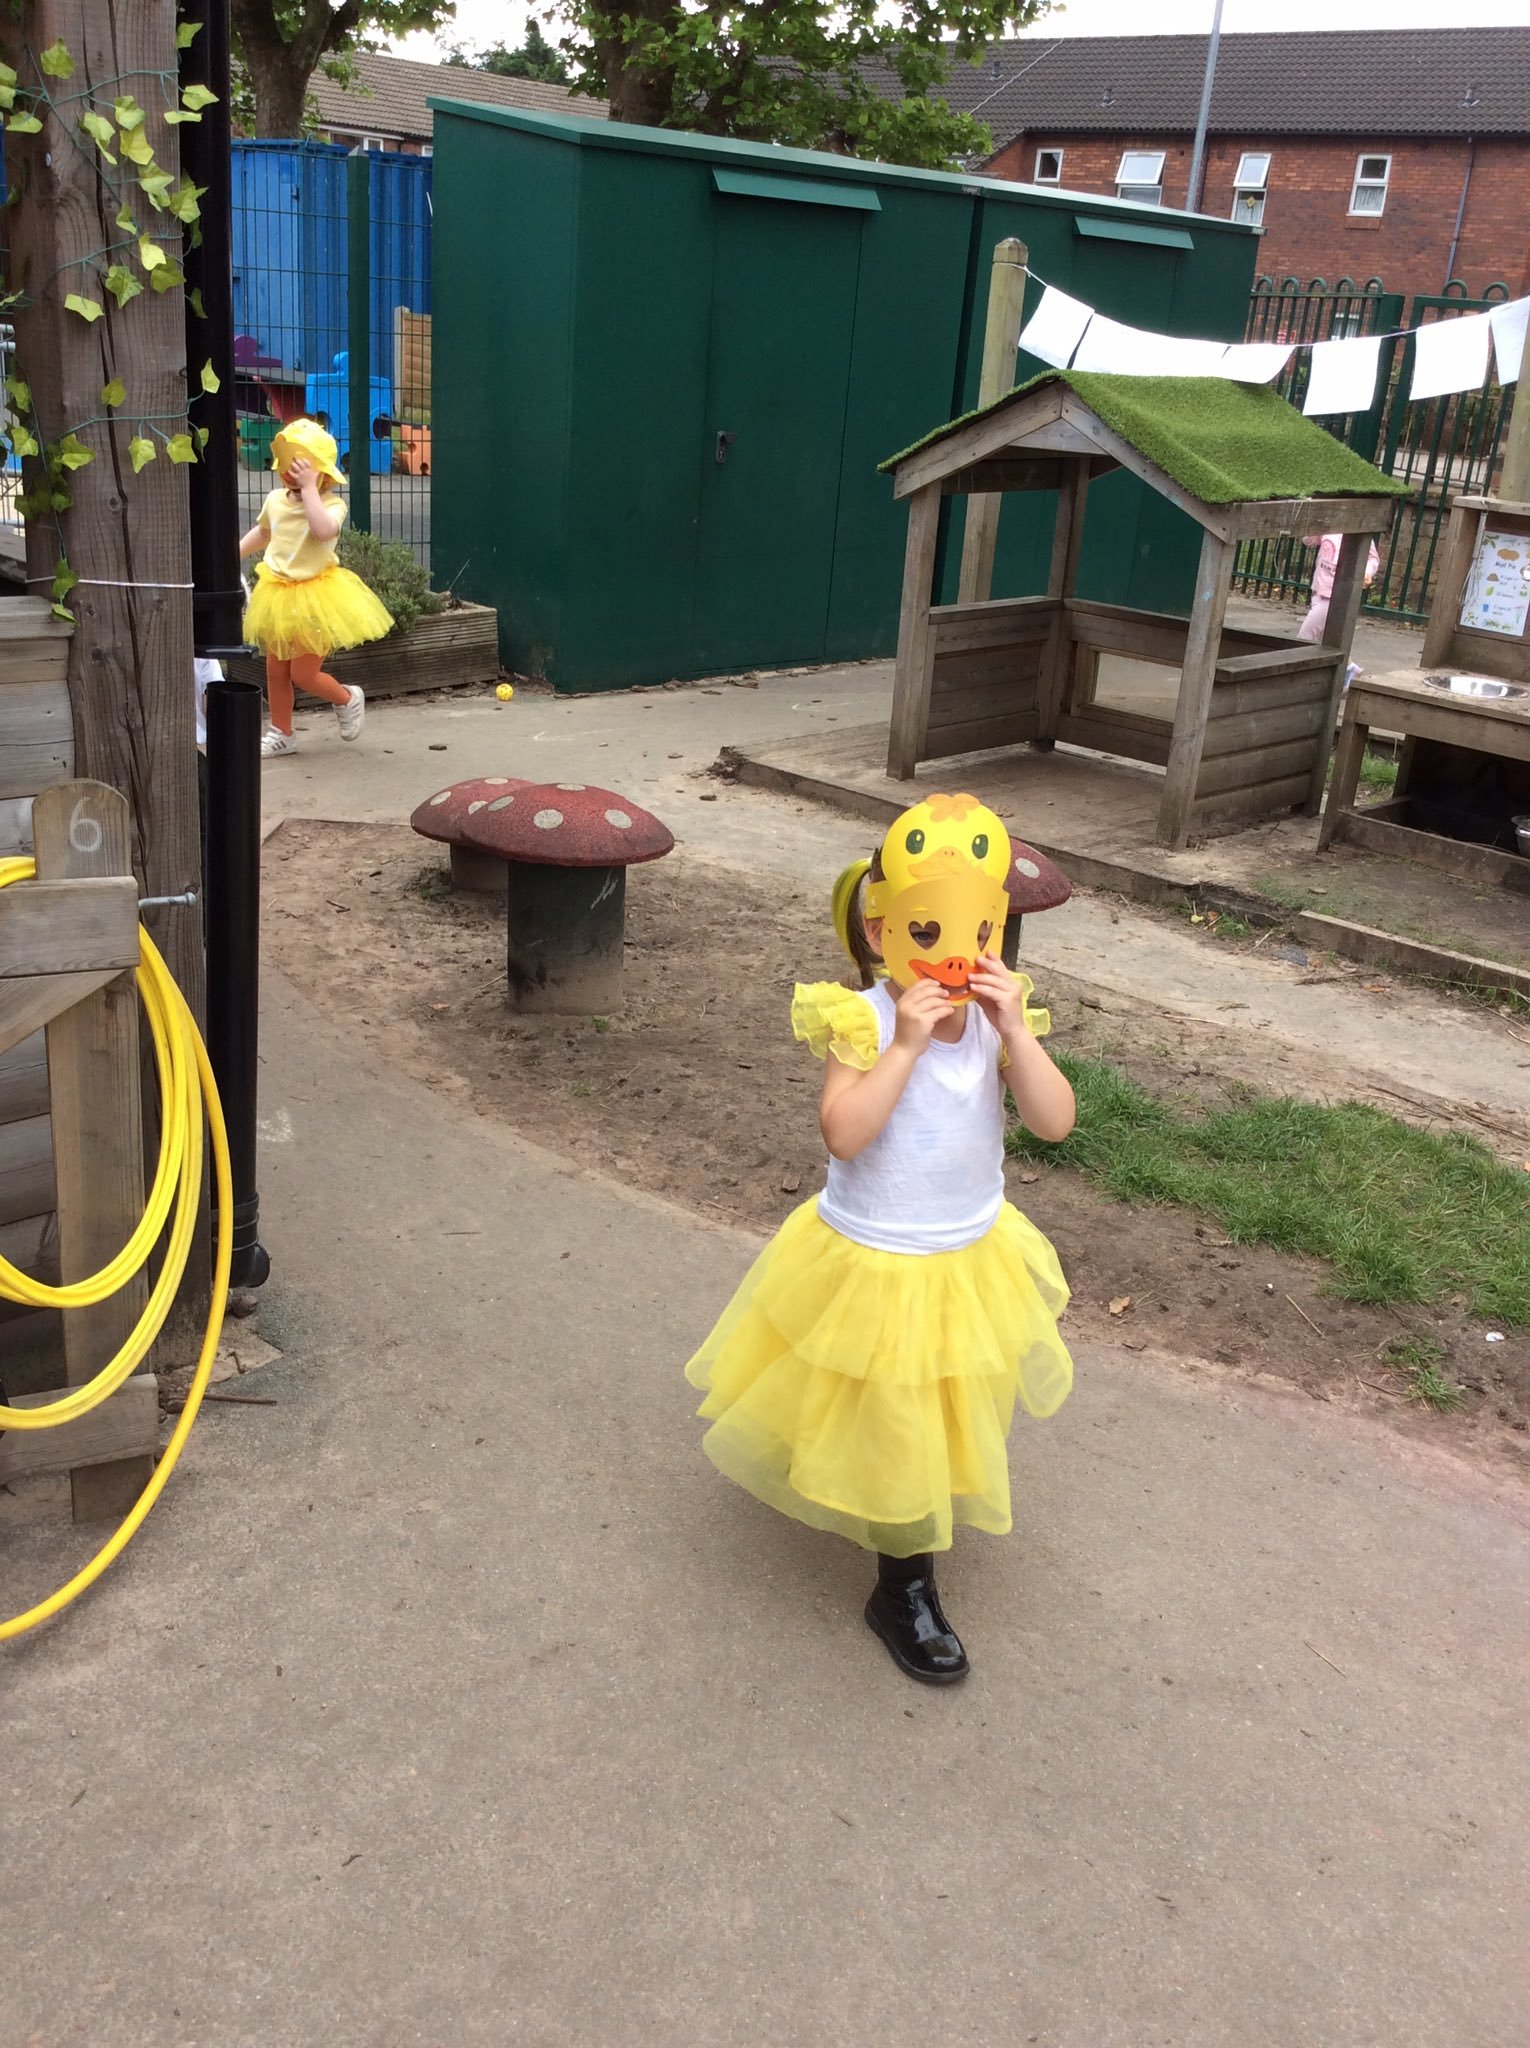 The children did a sponsored duck run